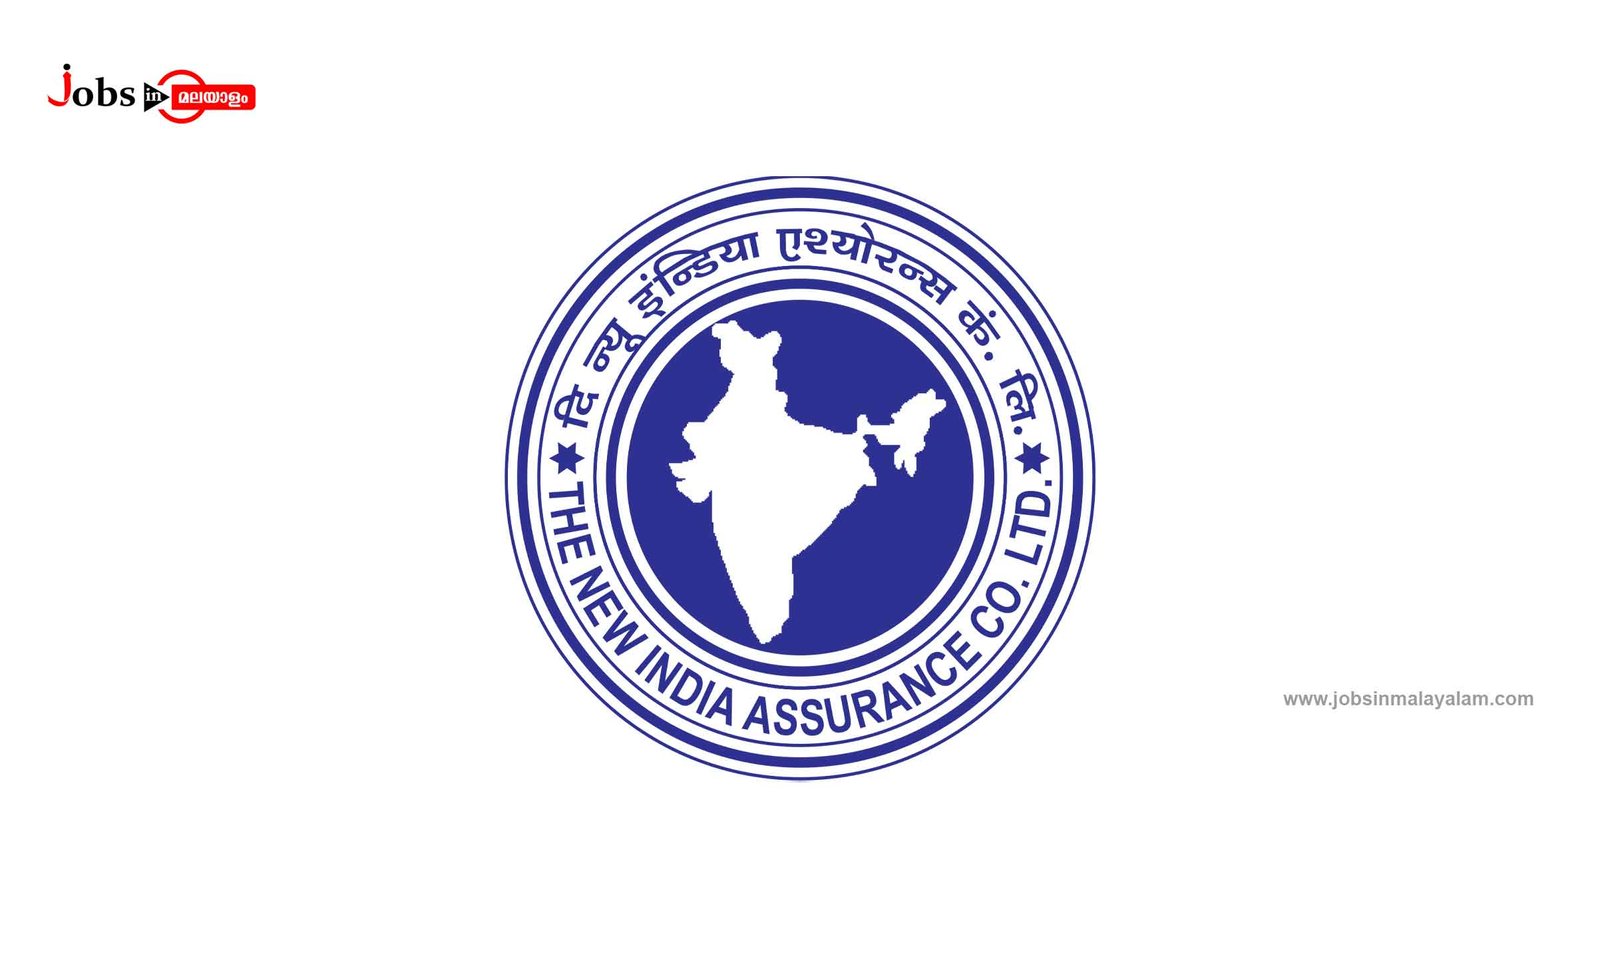 The New India Assurance Company Ltd